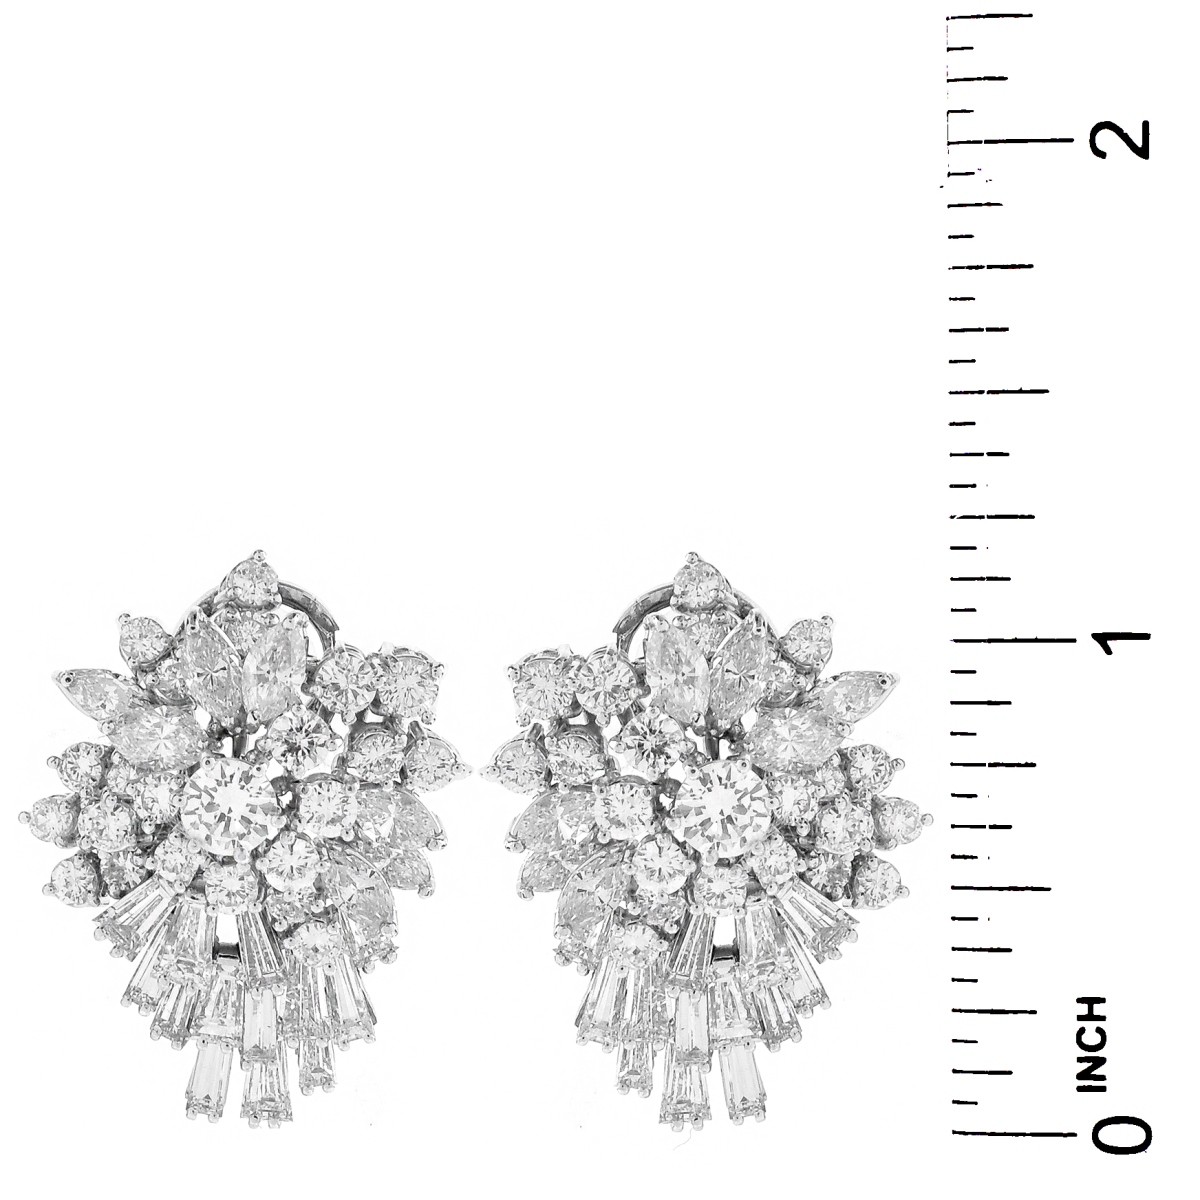 19.0ct Diamond and Platinum Earrings